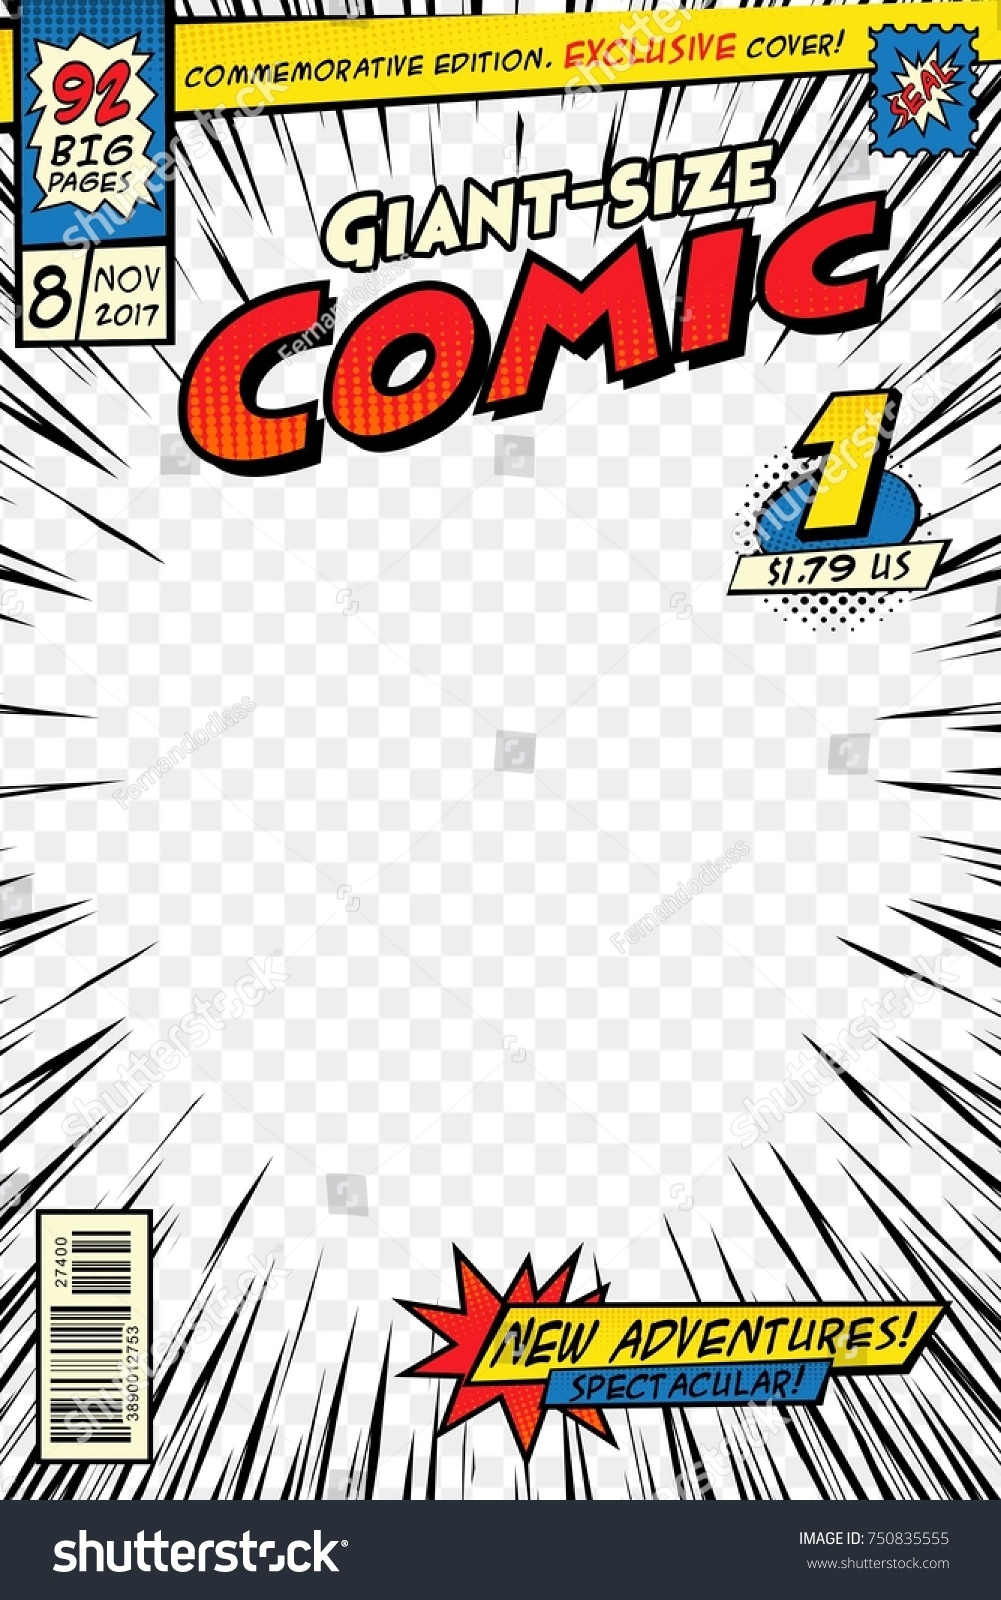 comic-book-cover-template-art-conceptual-stock-vector-royalty-free